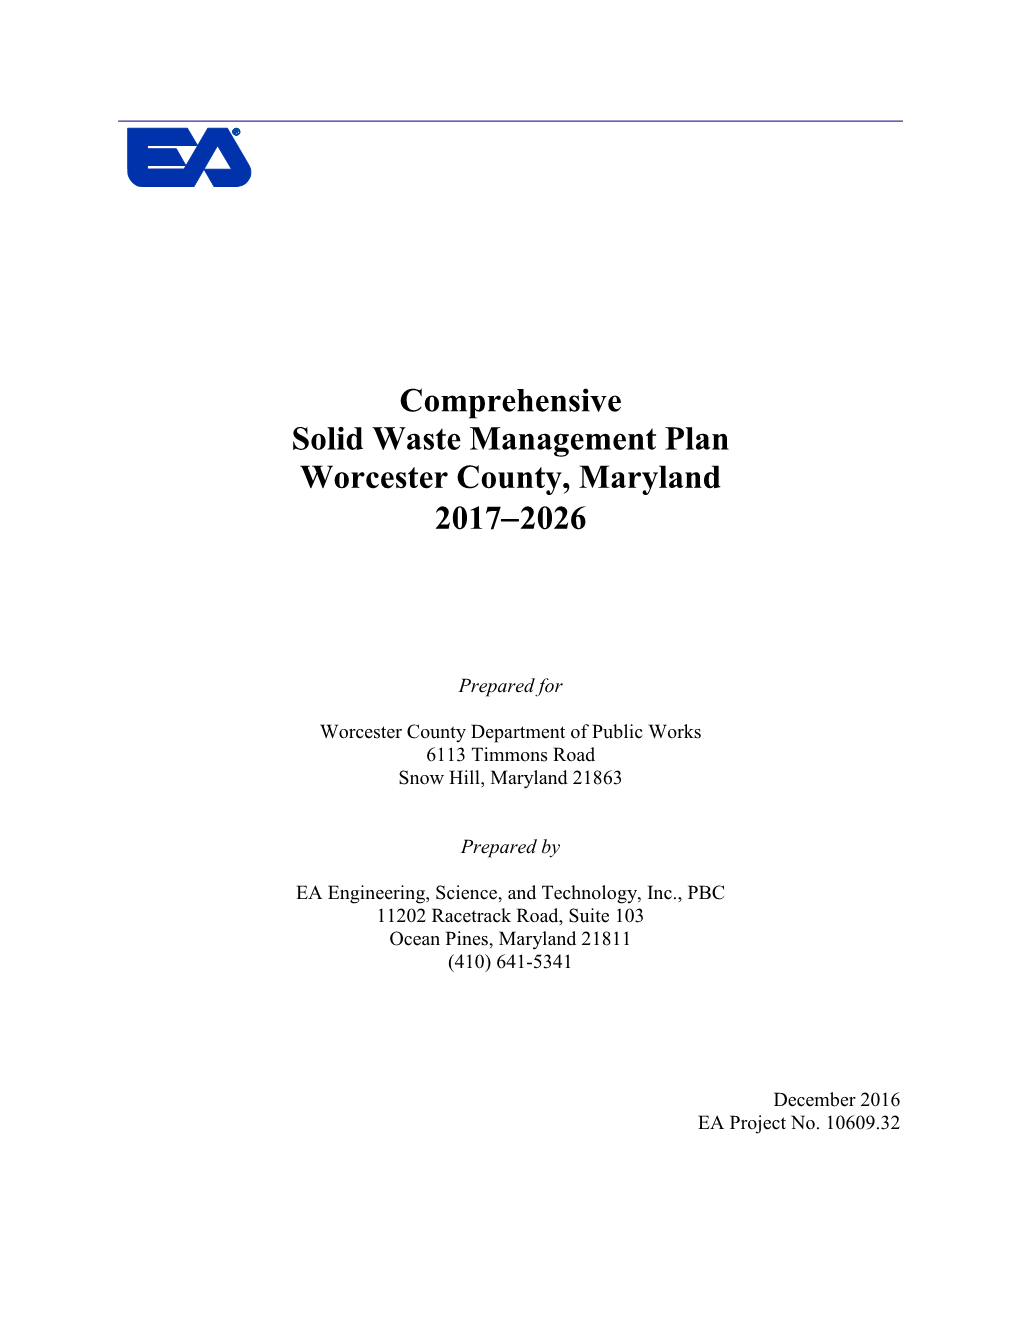 Comprehensive Solid Waste Management Plan Worcester County, Maryland 2017-2026